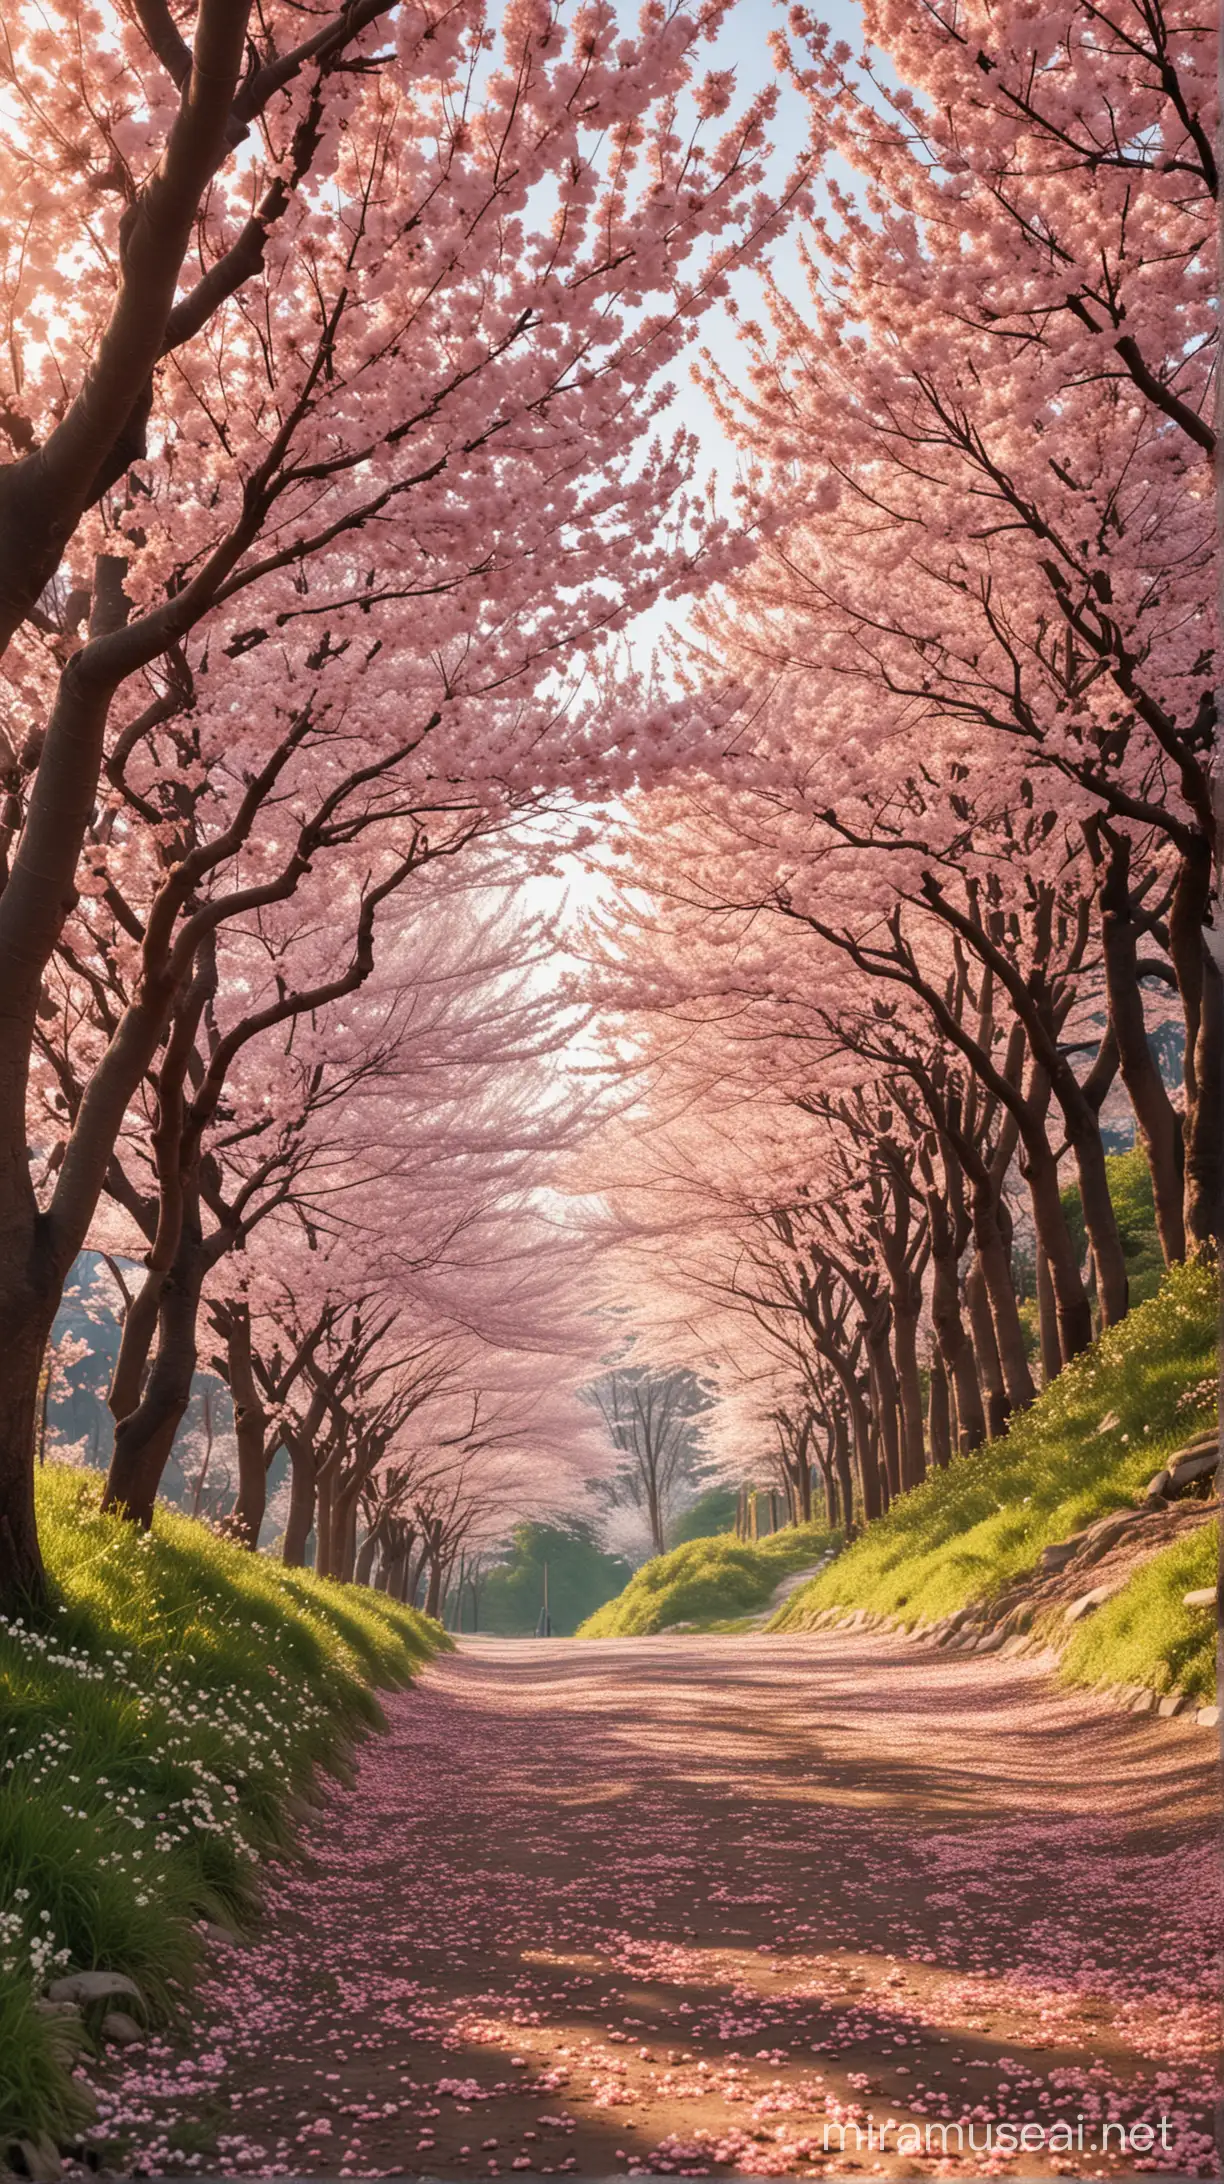 Enchanting Cherry Blossom Hill Landscape Sunlight Filtering Through Blooms